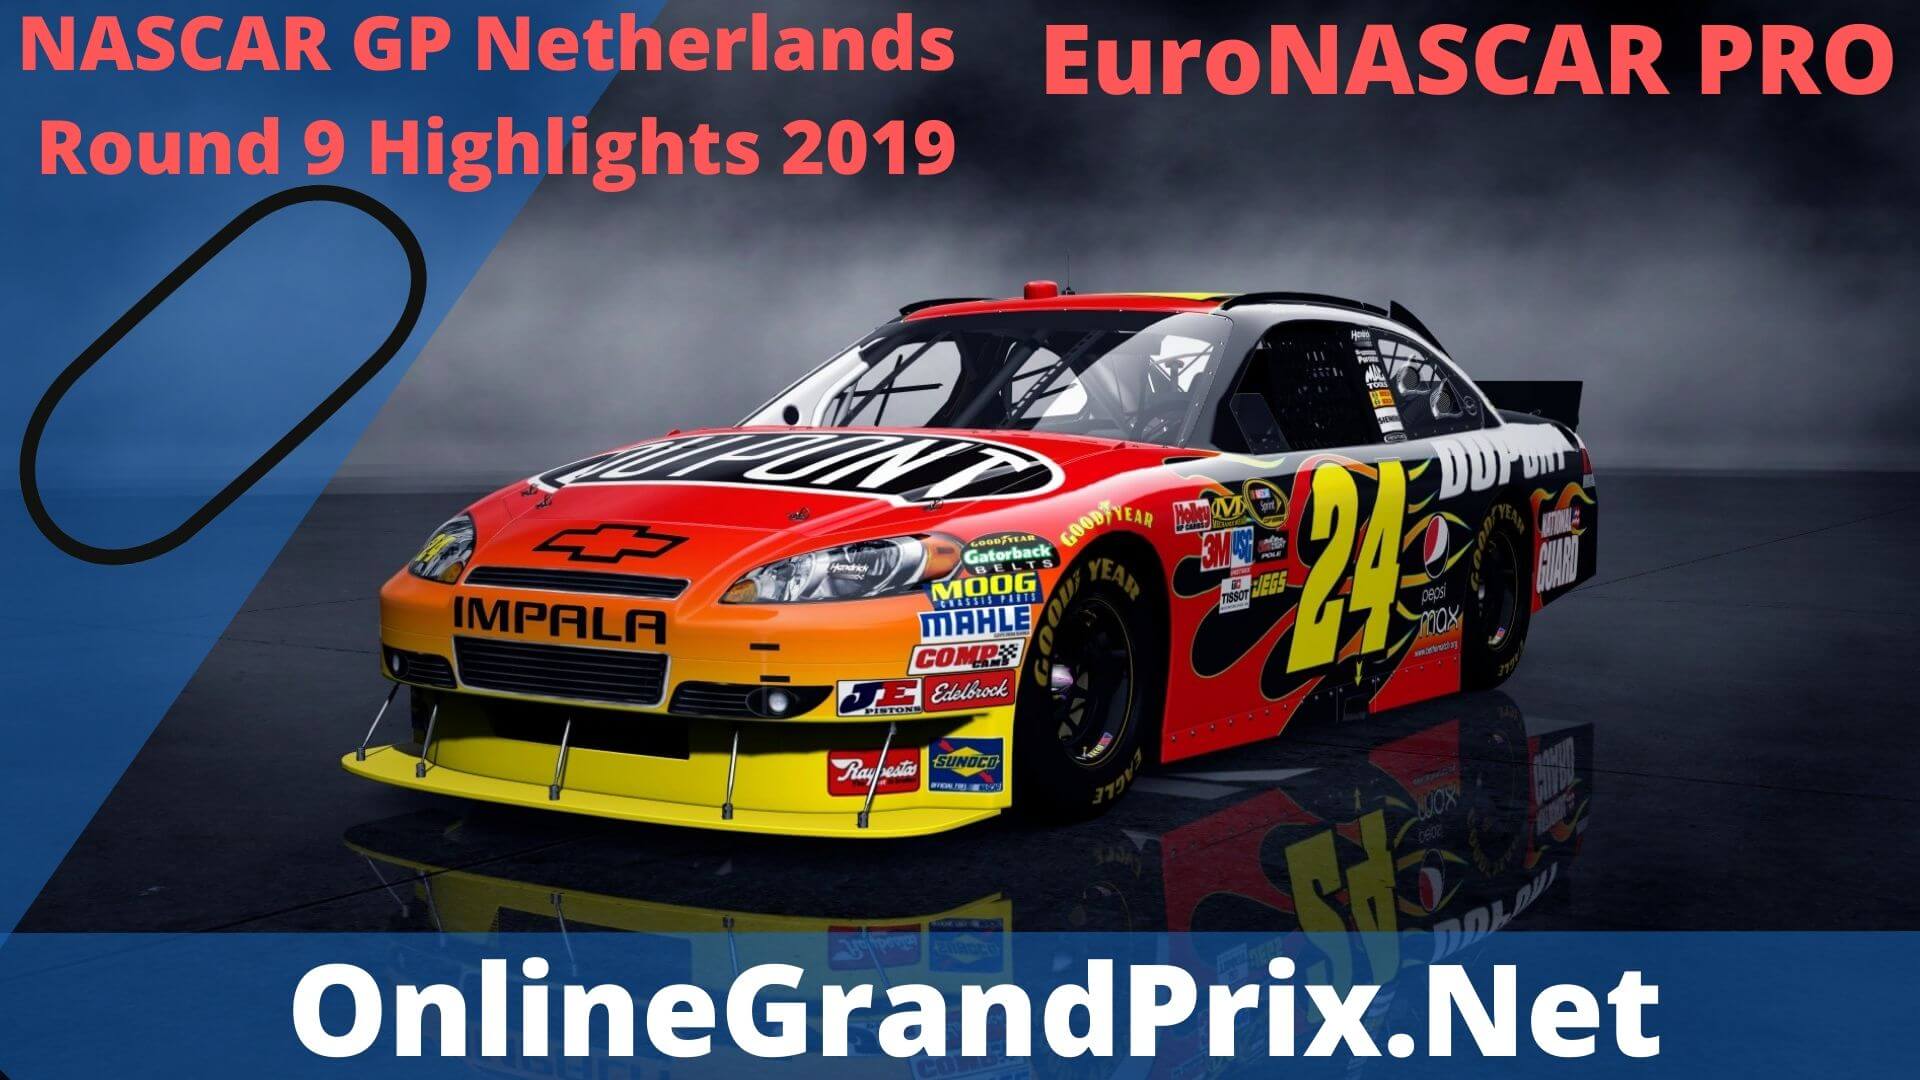 NASCAR GP Netherlands Round 9 Highlights 2019 